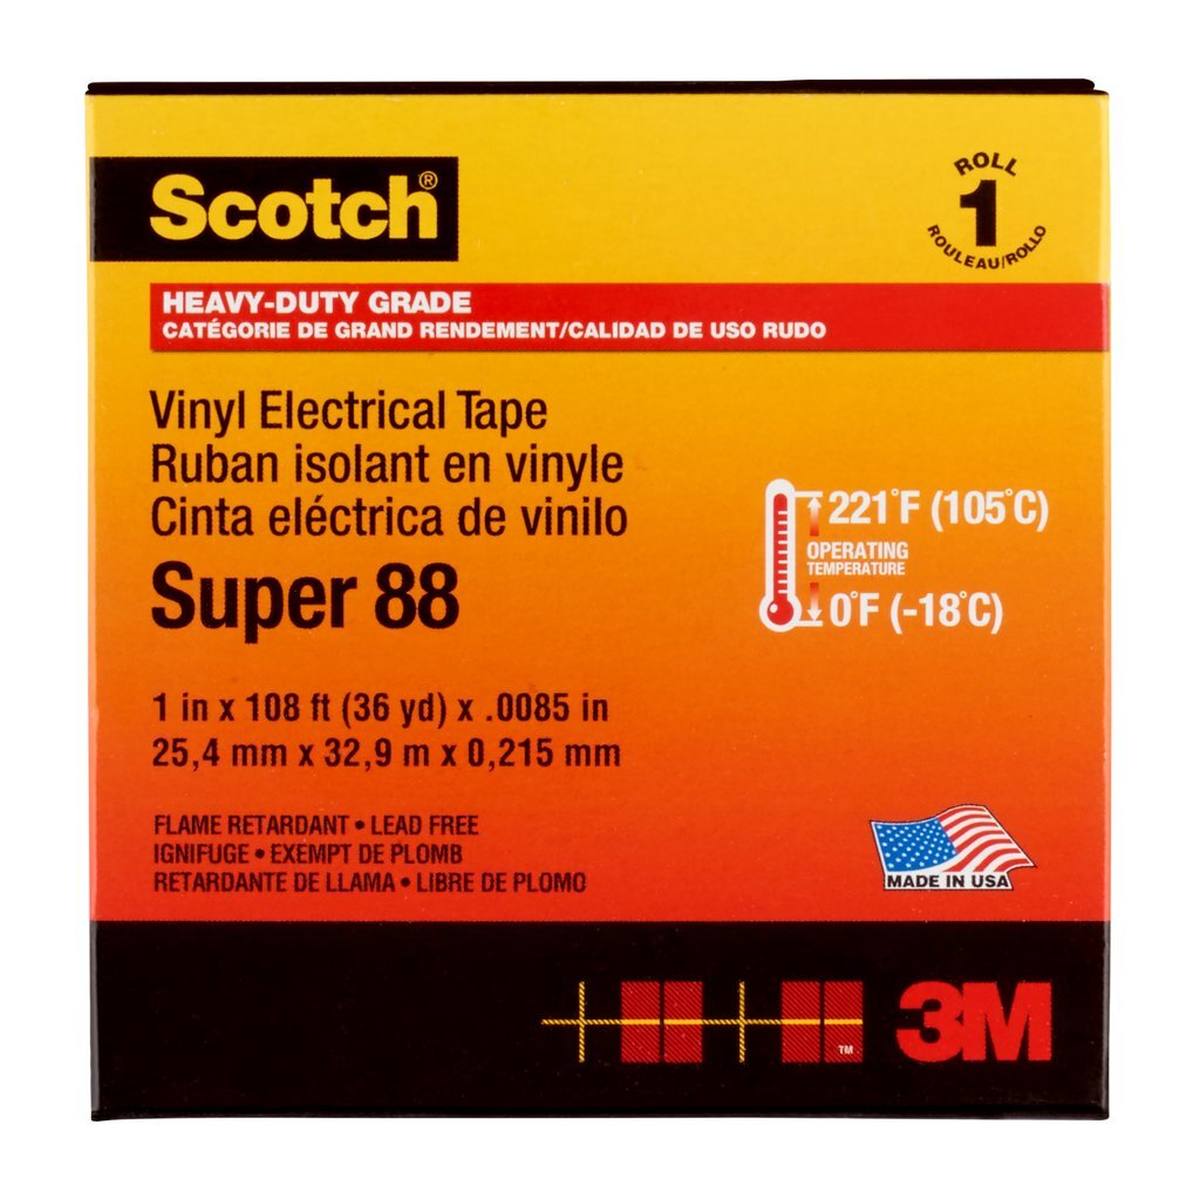  3M Scotch Super 88 vinyylinen sähköeristysteippi, musta, 25 mm x 33 m, 0,22 mm